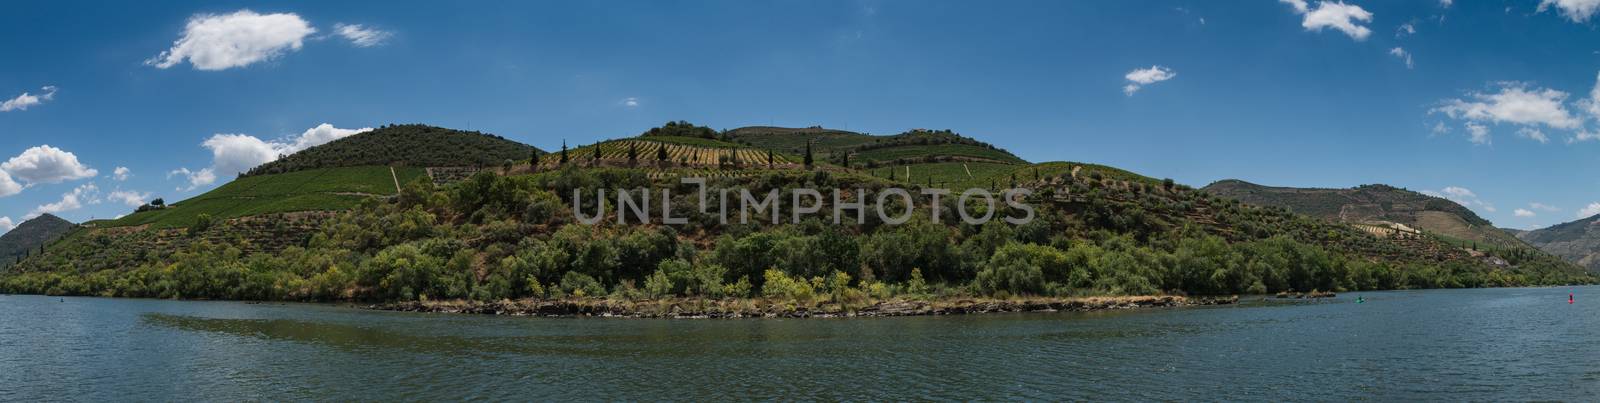 Vineyars in Douro Valley by homydesign